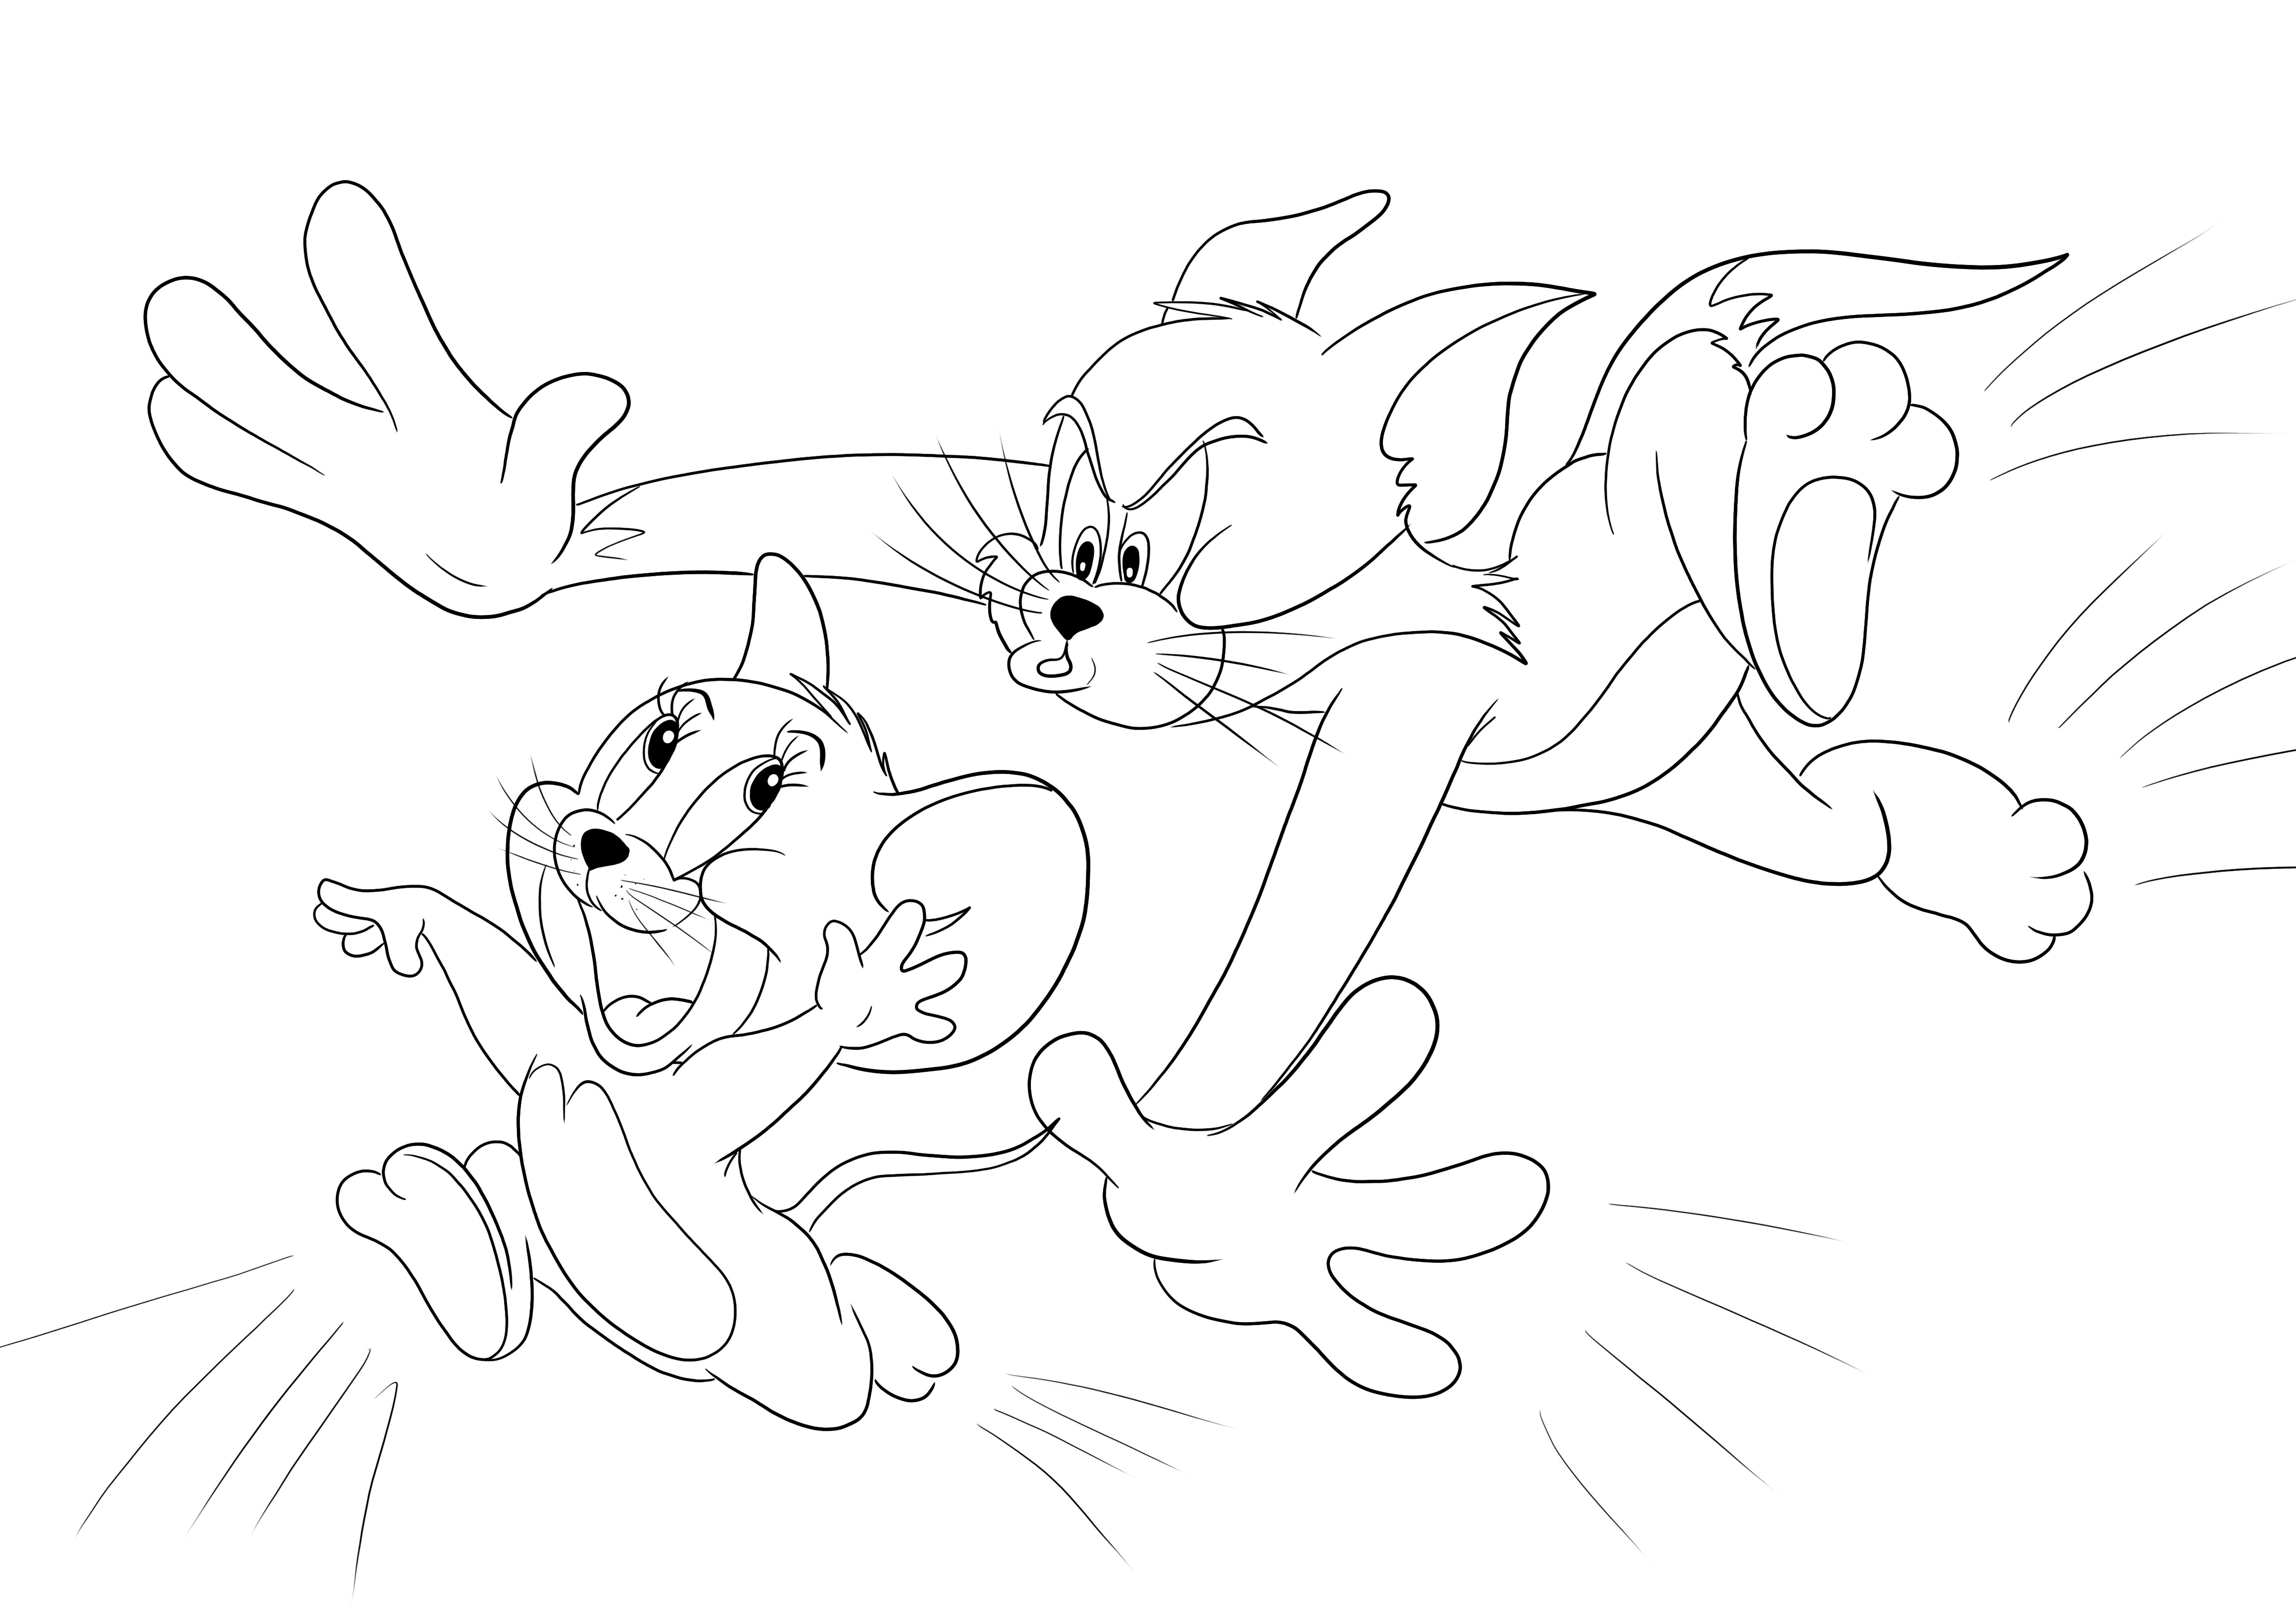 Tom persiguiendo a Jerry para colorear para imprimir o descargar gratis